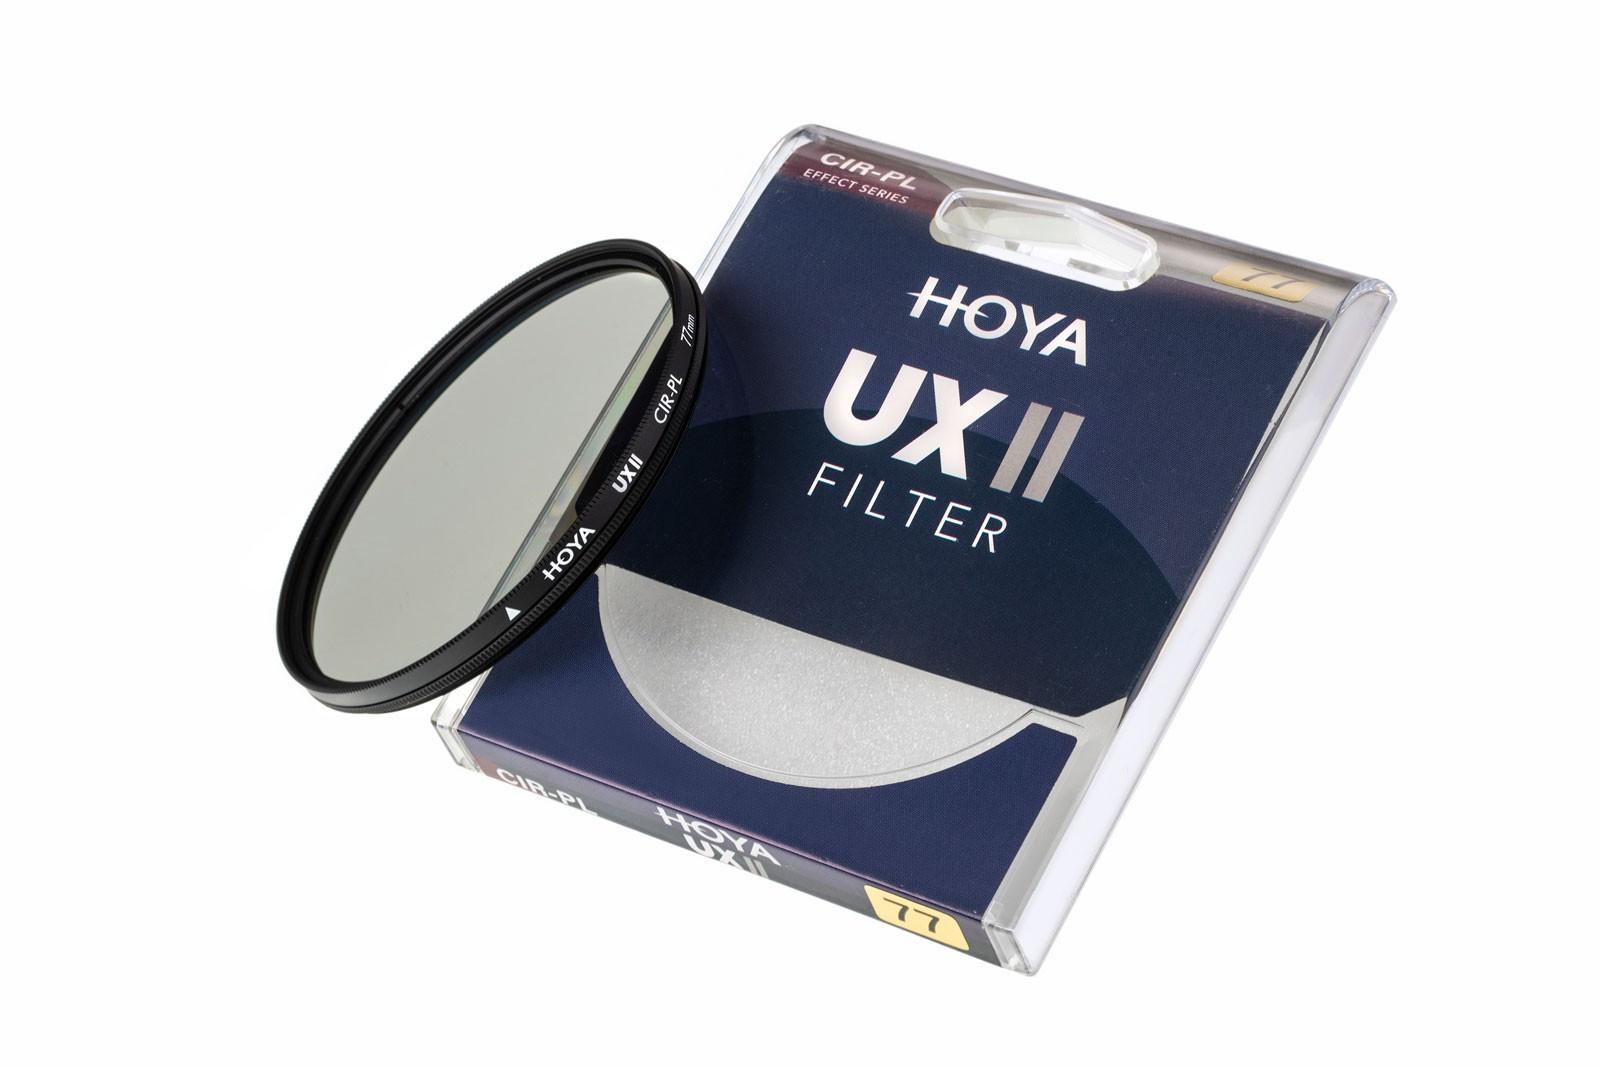 Hoya  Hoya UX II CIR-PL Filtro polarizzatore circolare per fotocamera 7,7 cm 